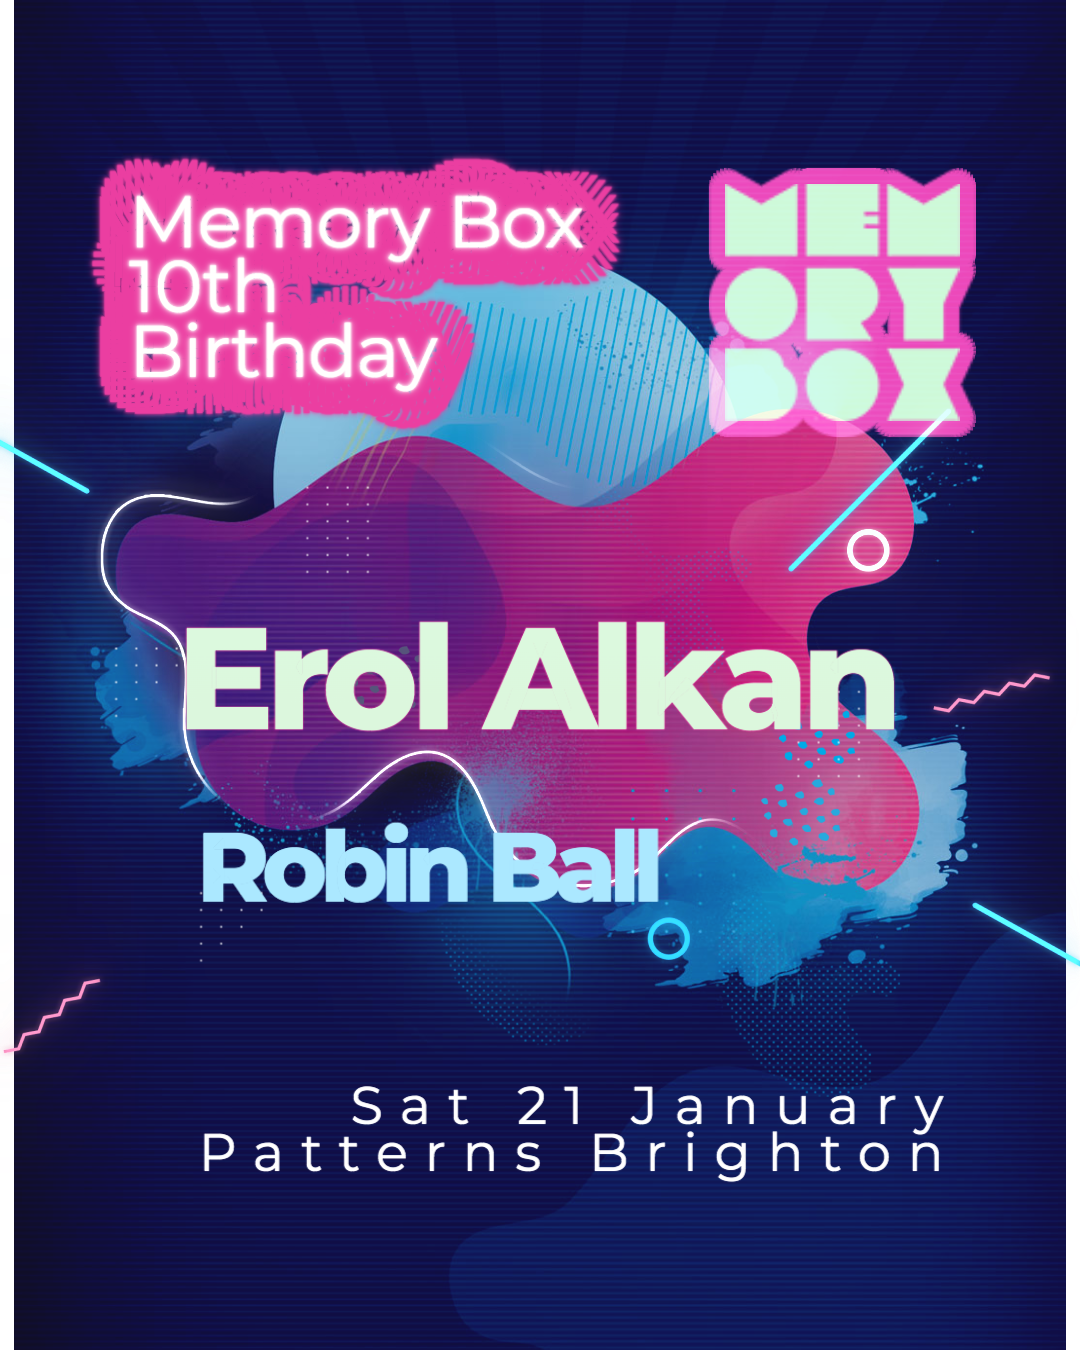 Memory Box 10 year birthday with Erol Alkan  - フライヤー表